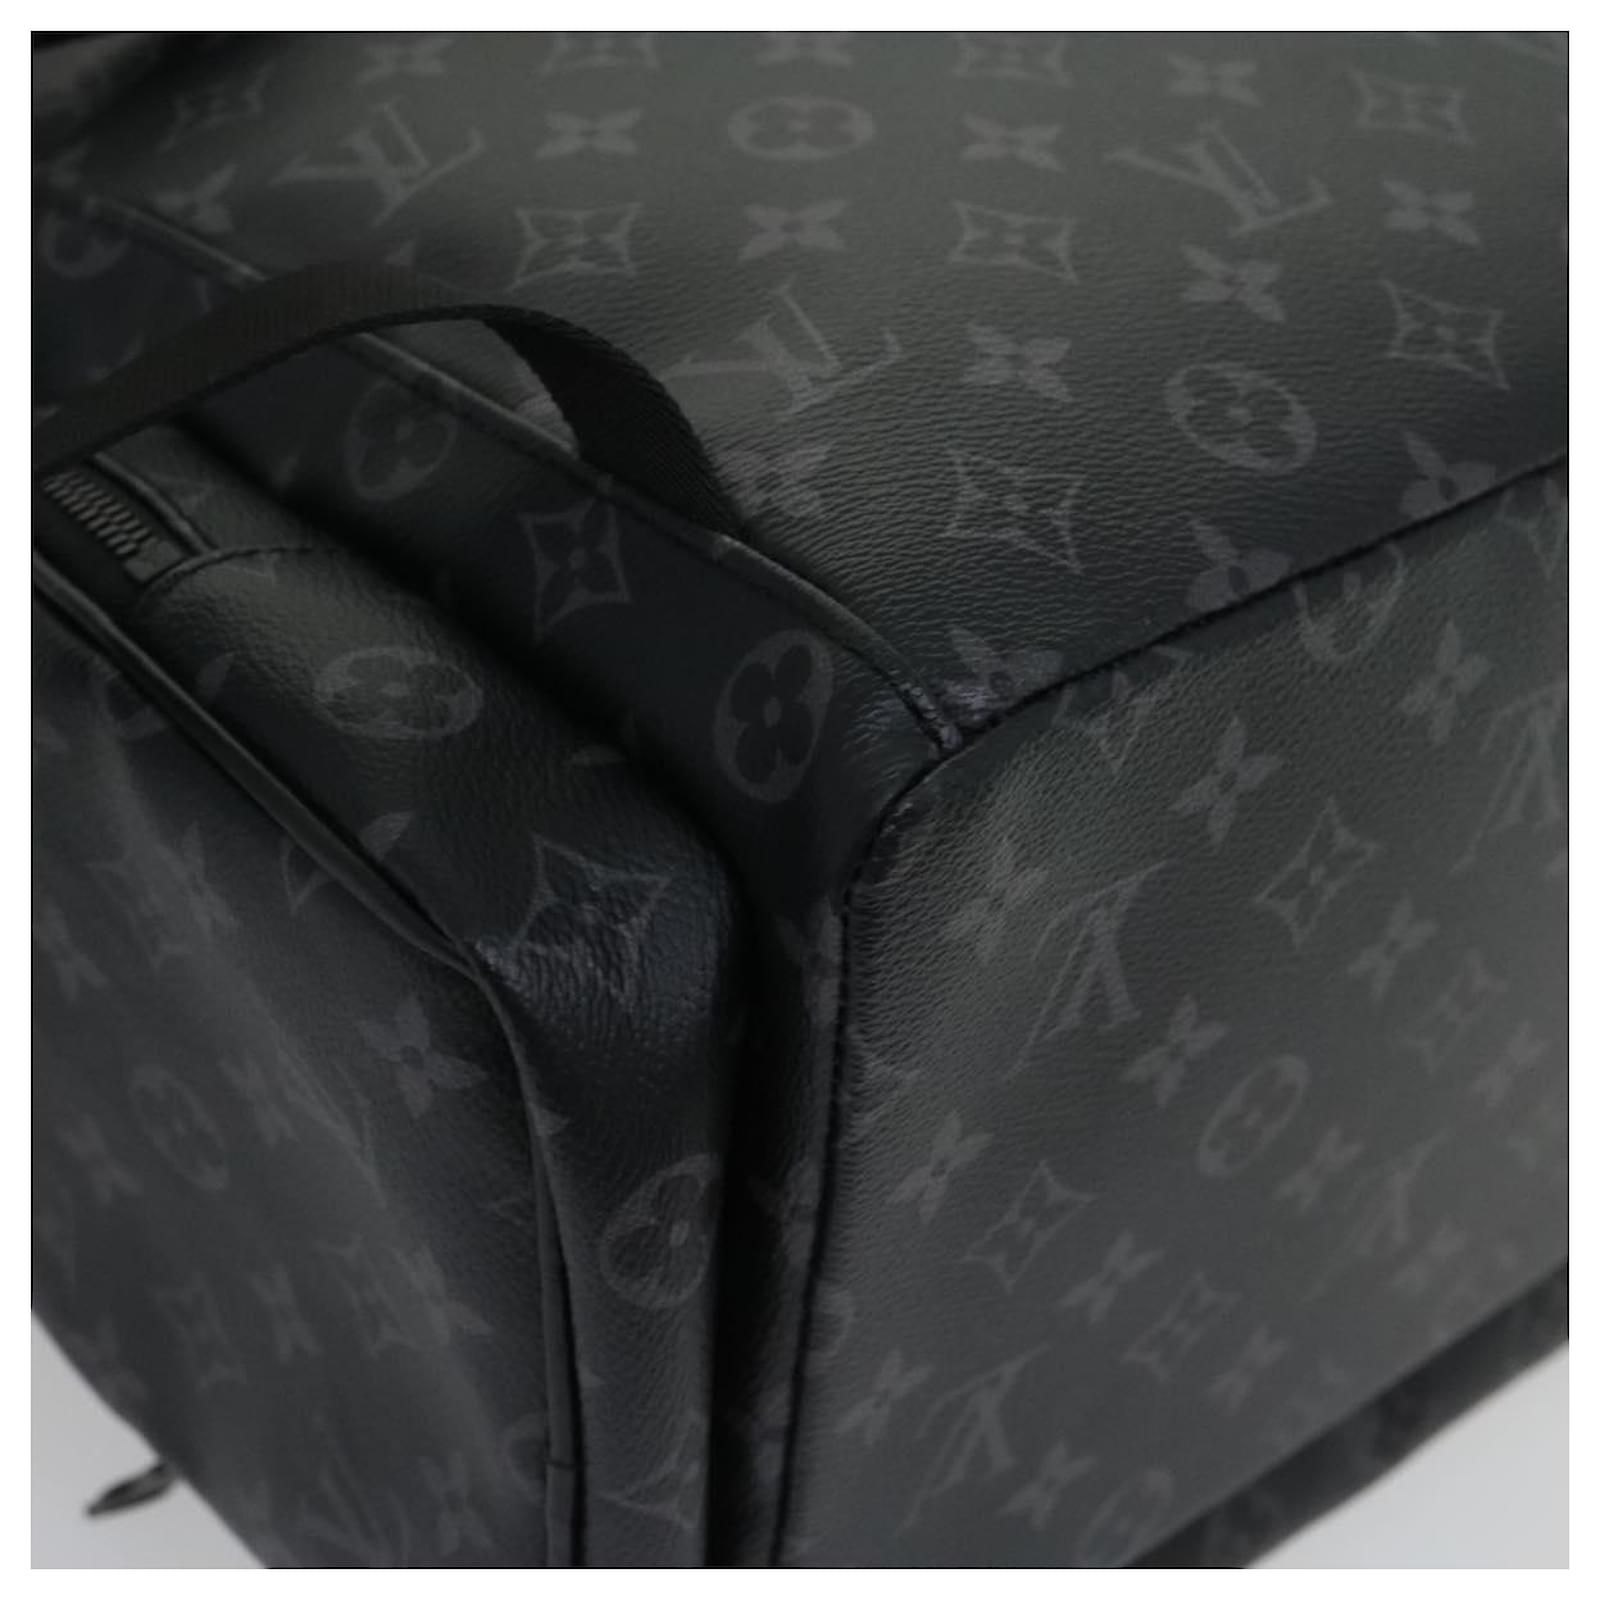 Shop Louis Vuitton Backpack trio (M45538) by Jion86